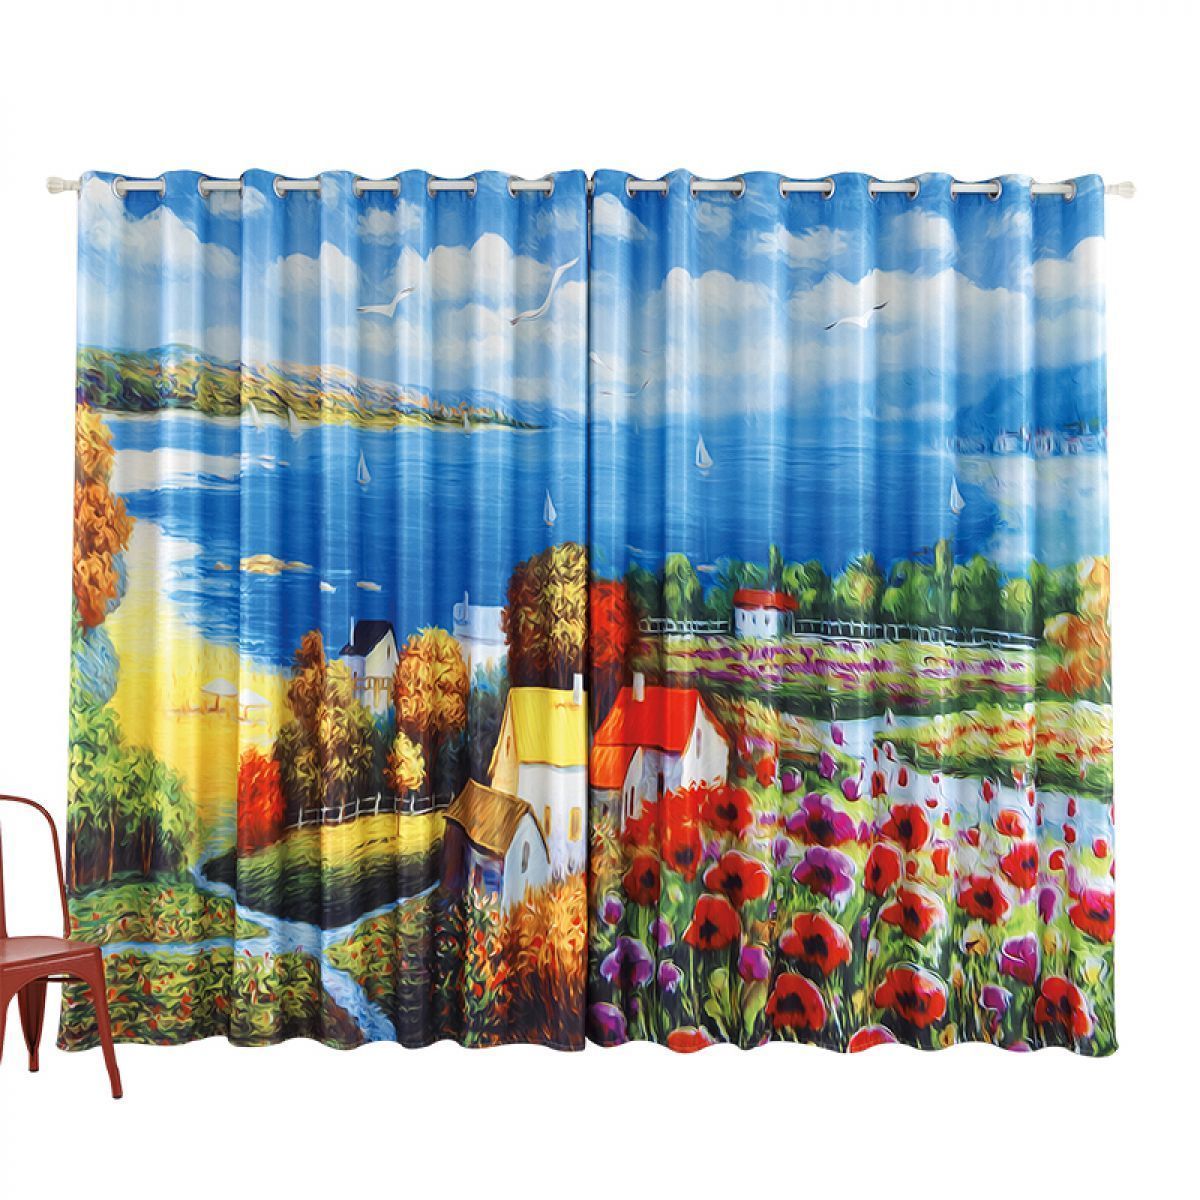 seaside and house printed window curtain home decor 1044